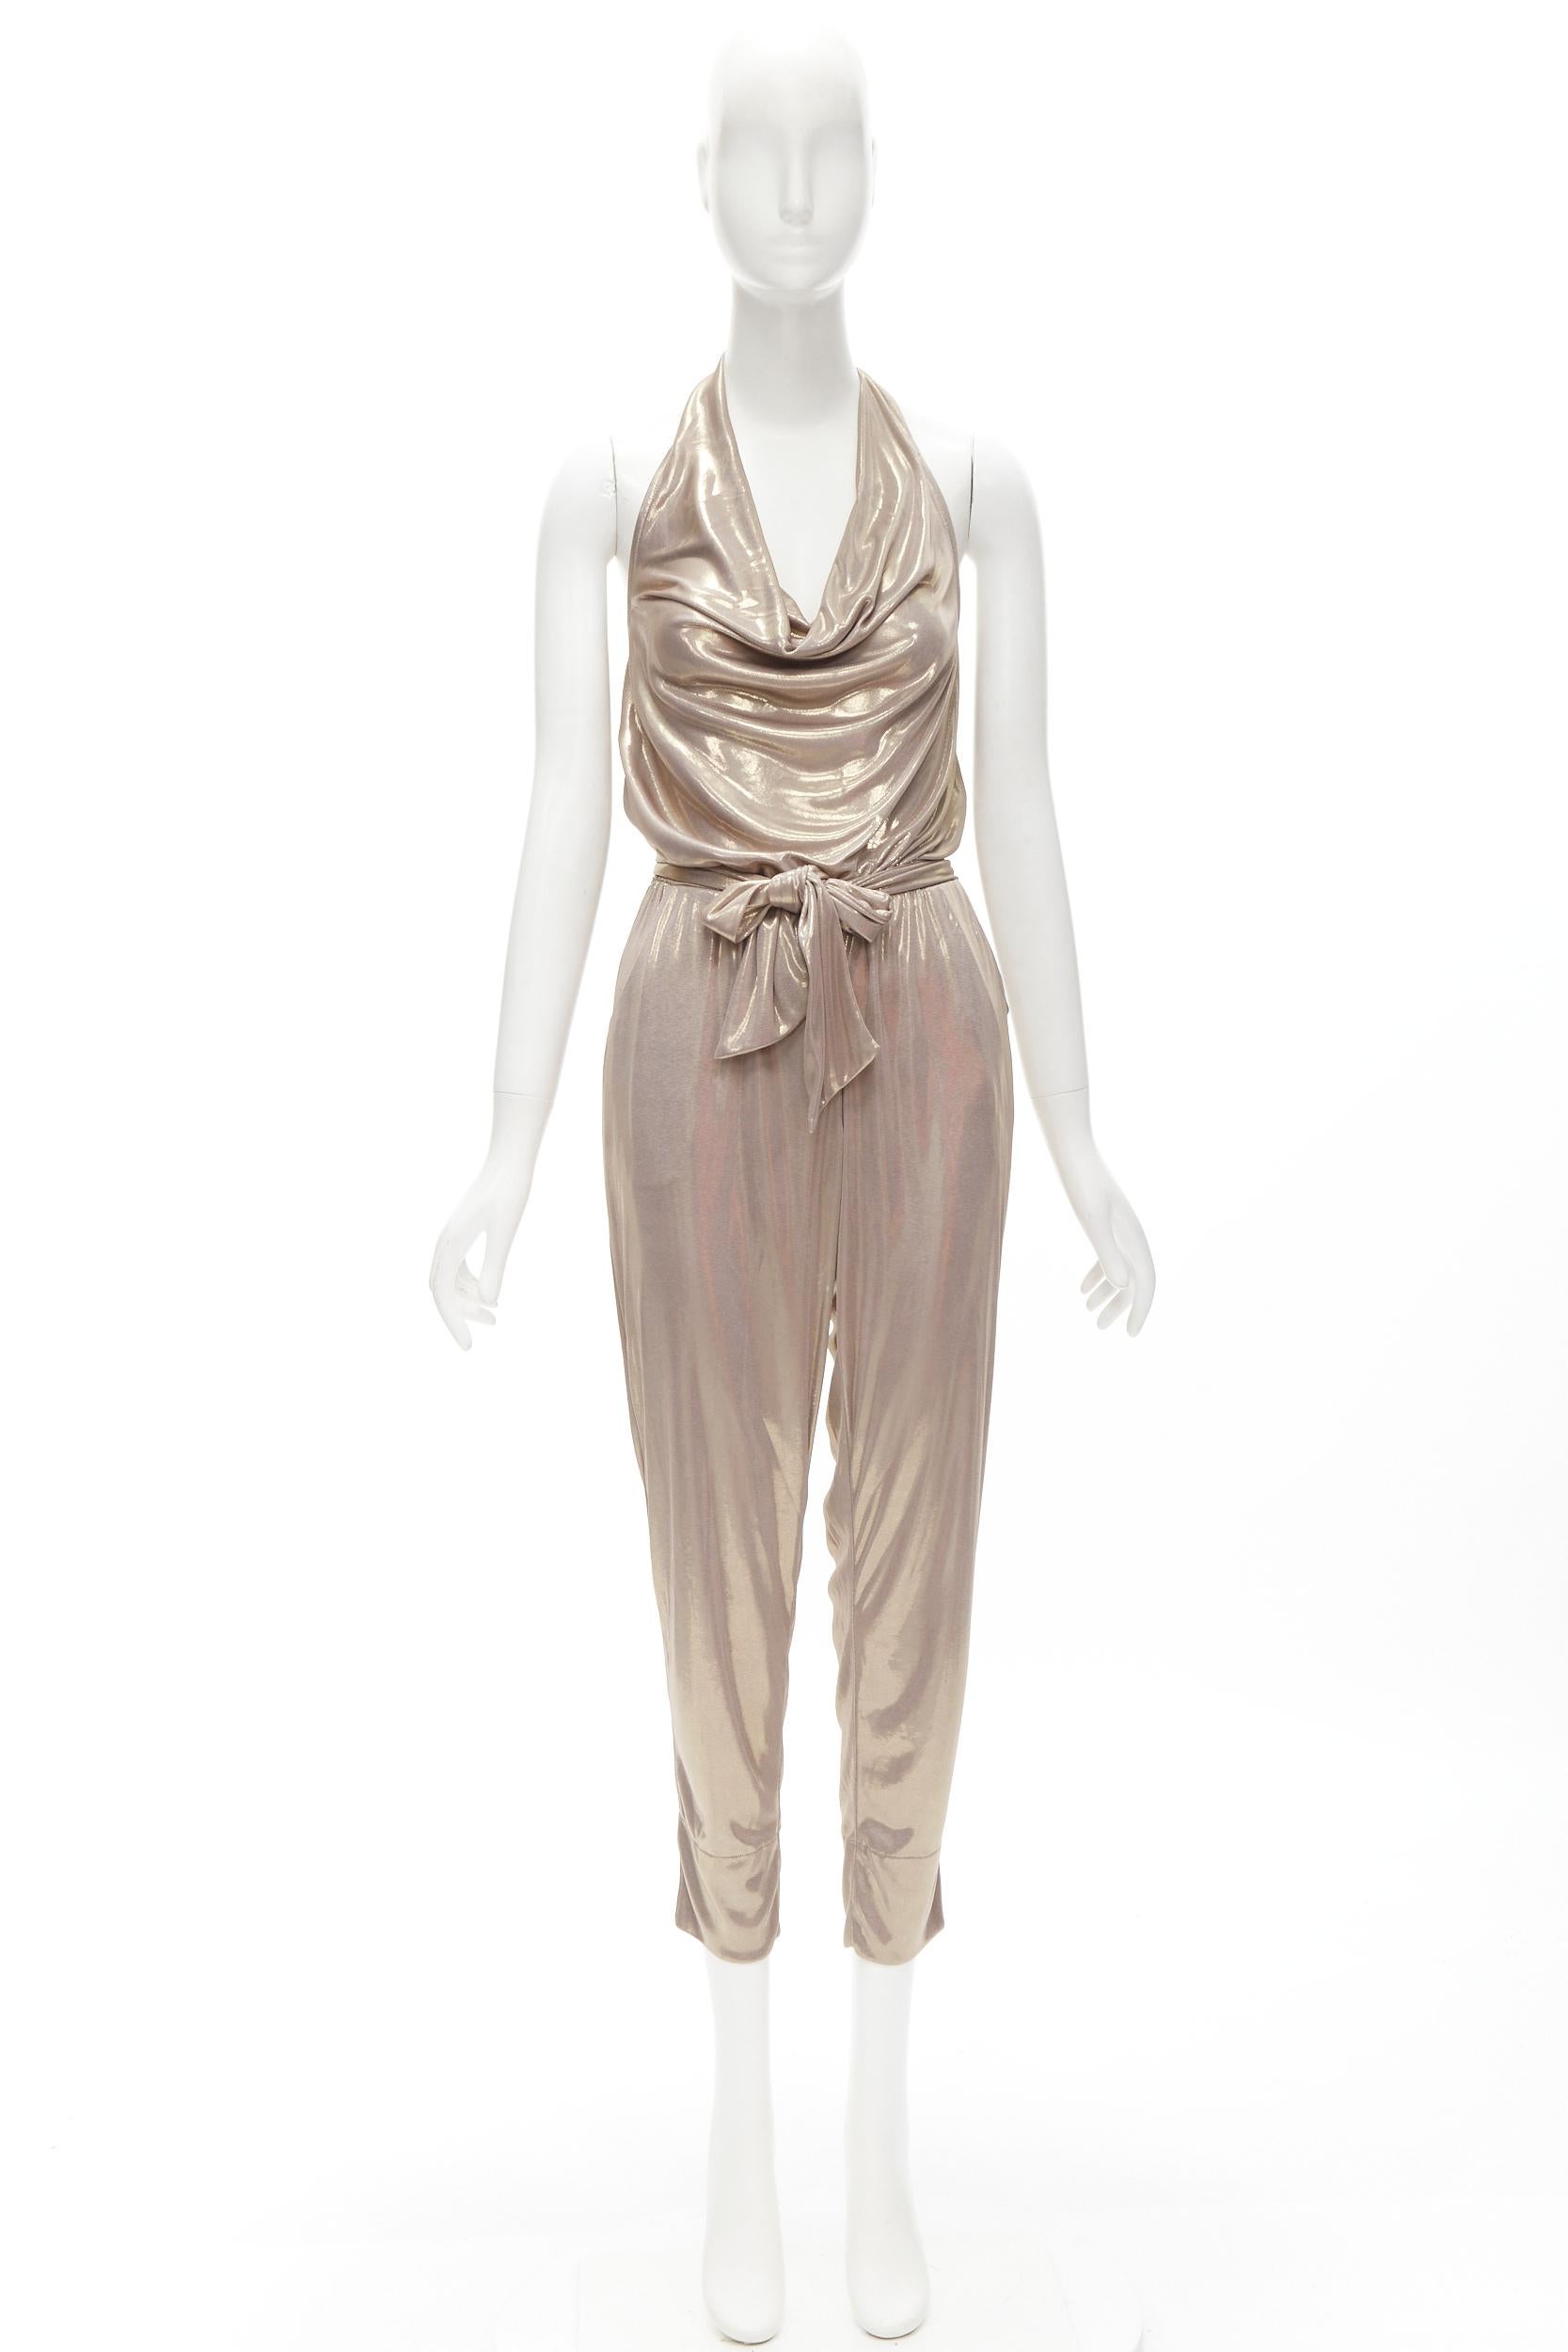 DIANE VON FUSTENBERG Carolette liquid metal gold halter backless jumpsuit S For Sale 4